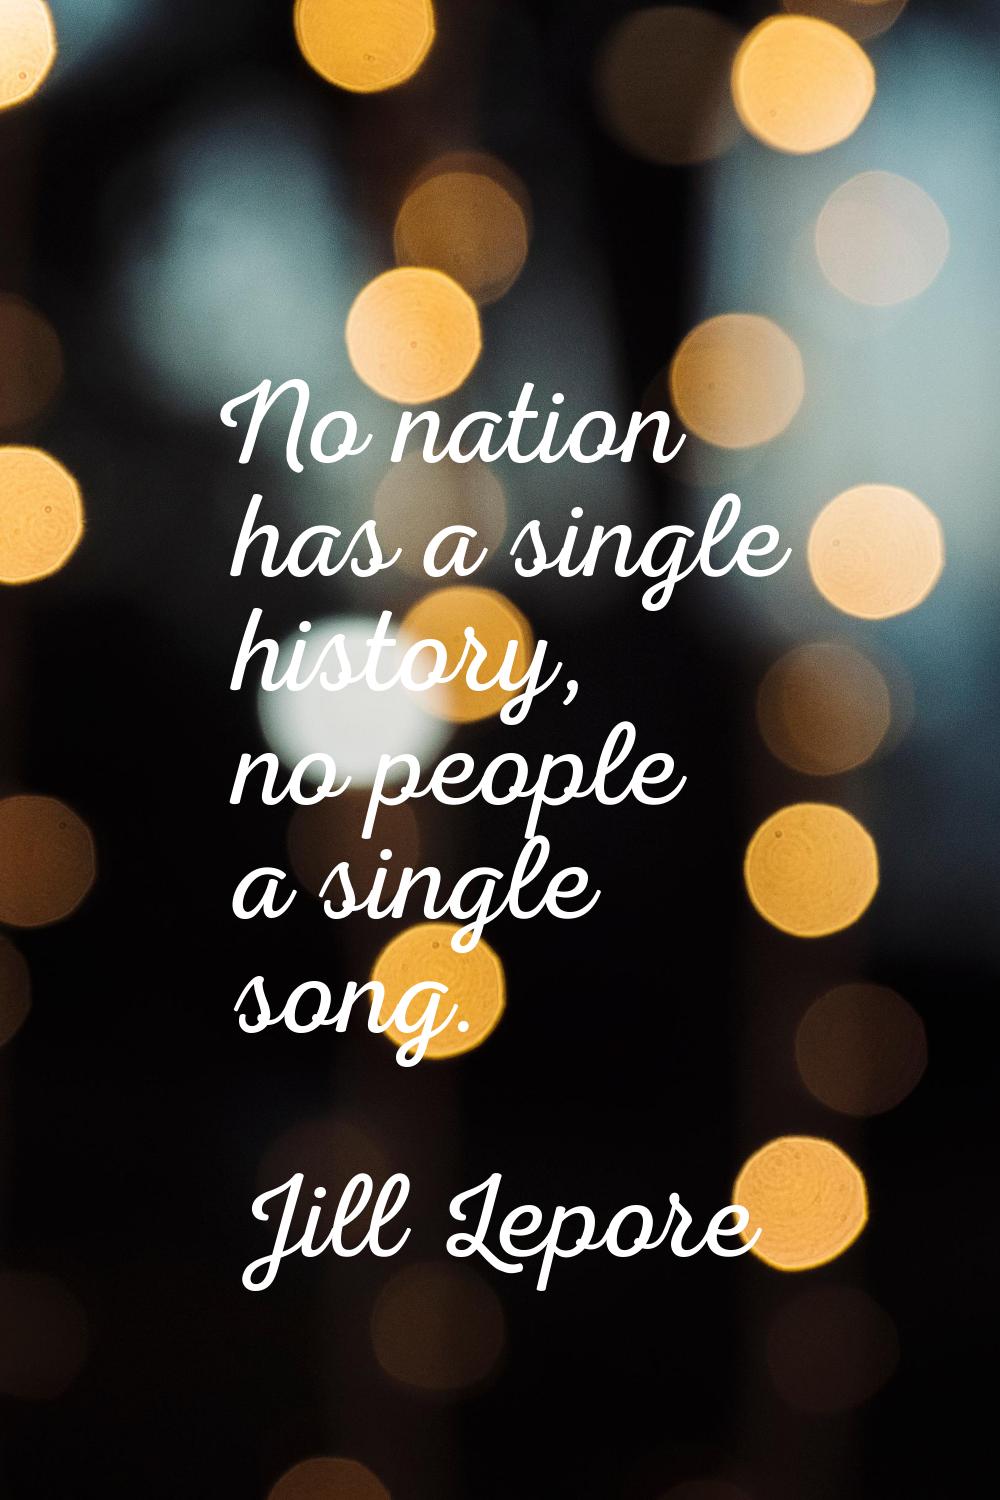 No nation has a single history, no people a single song.